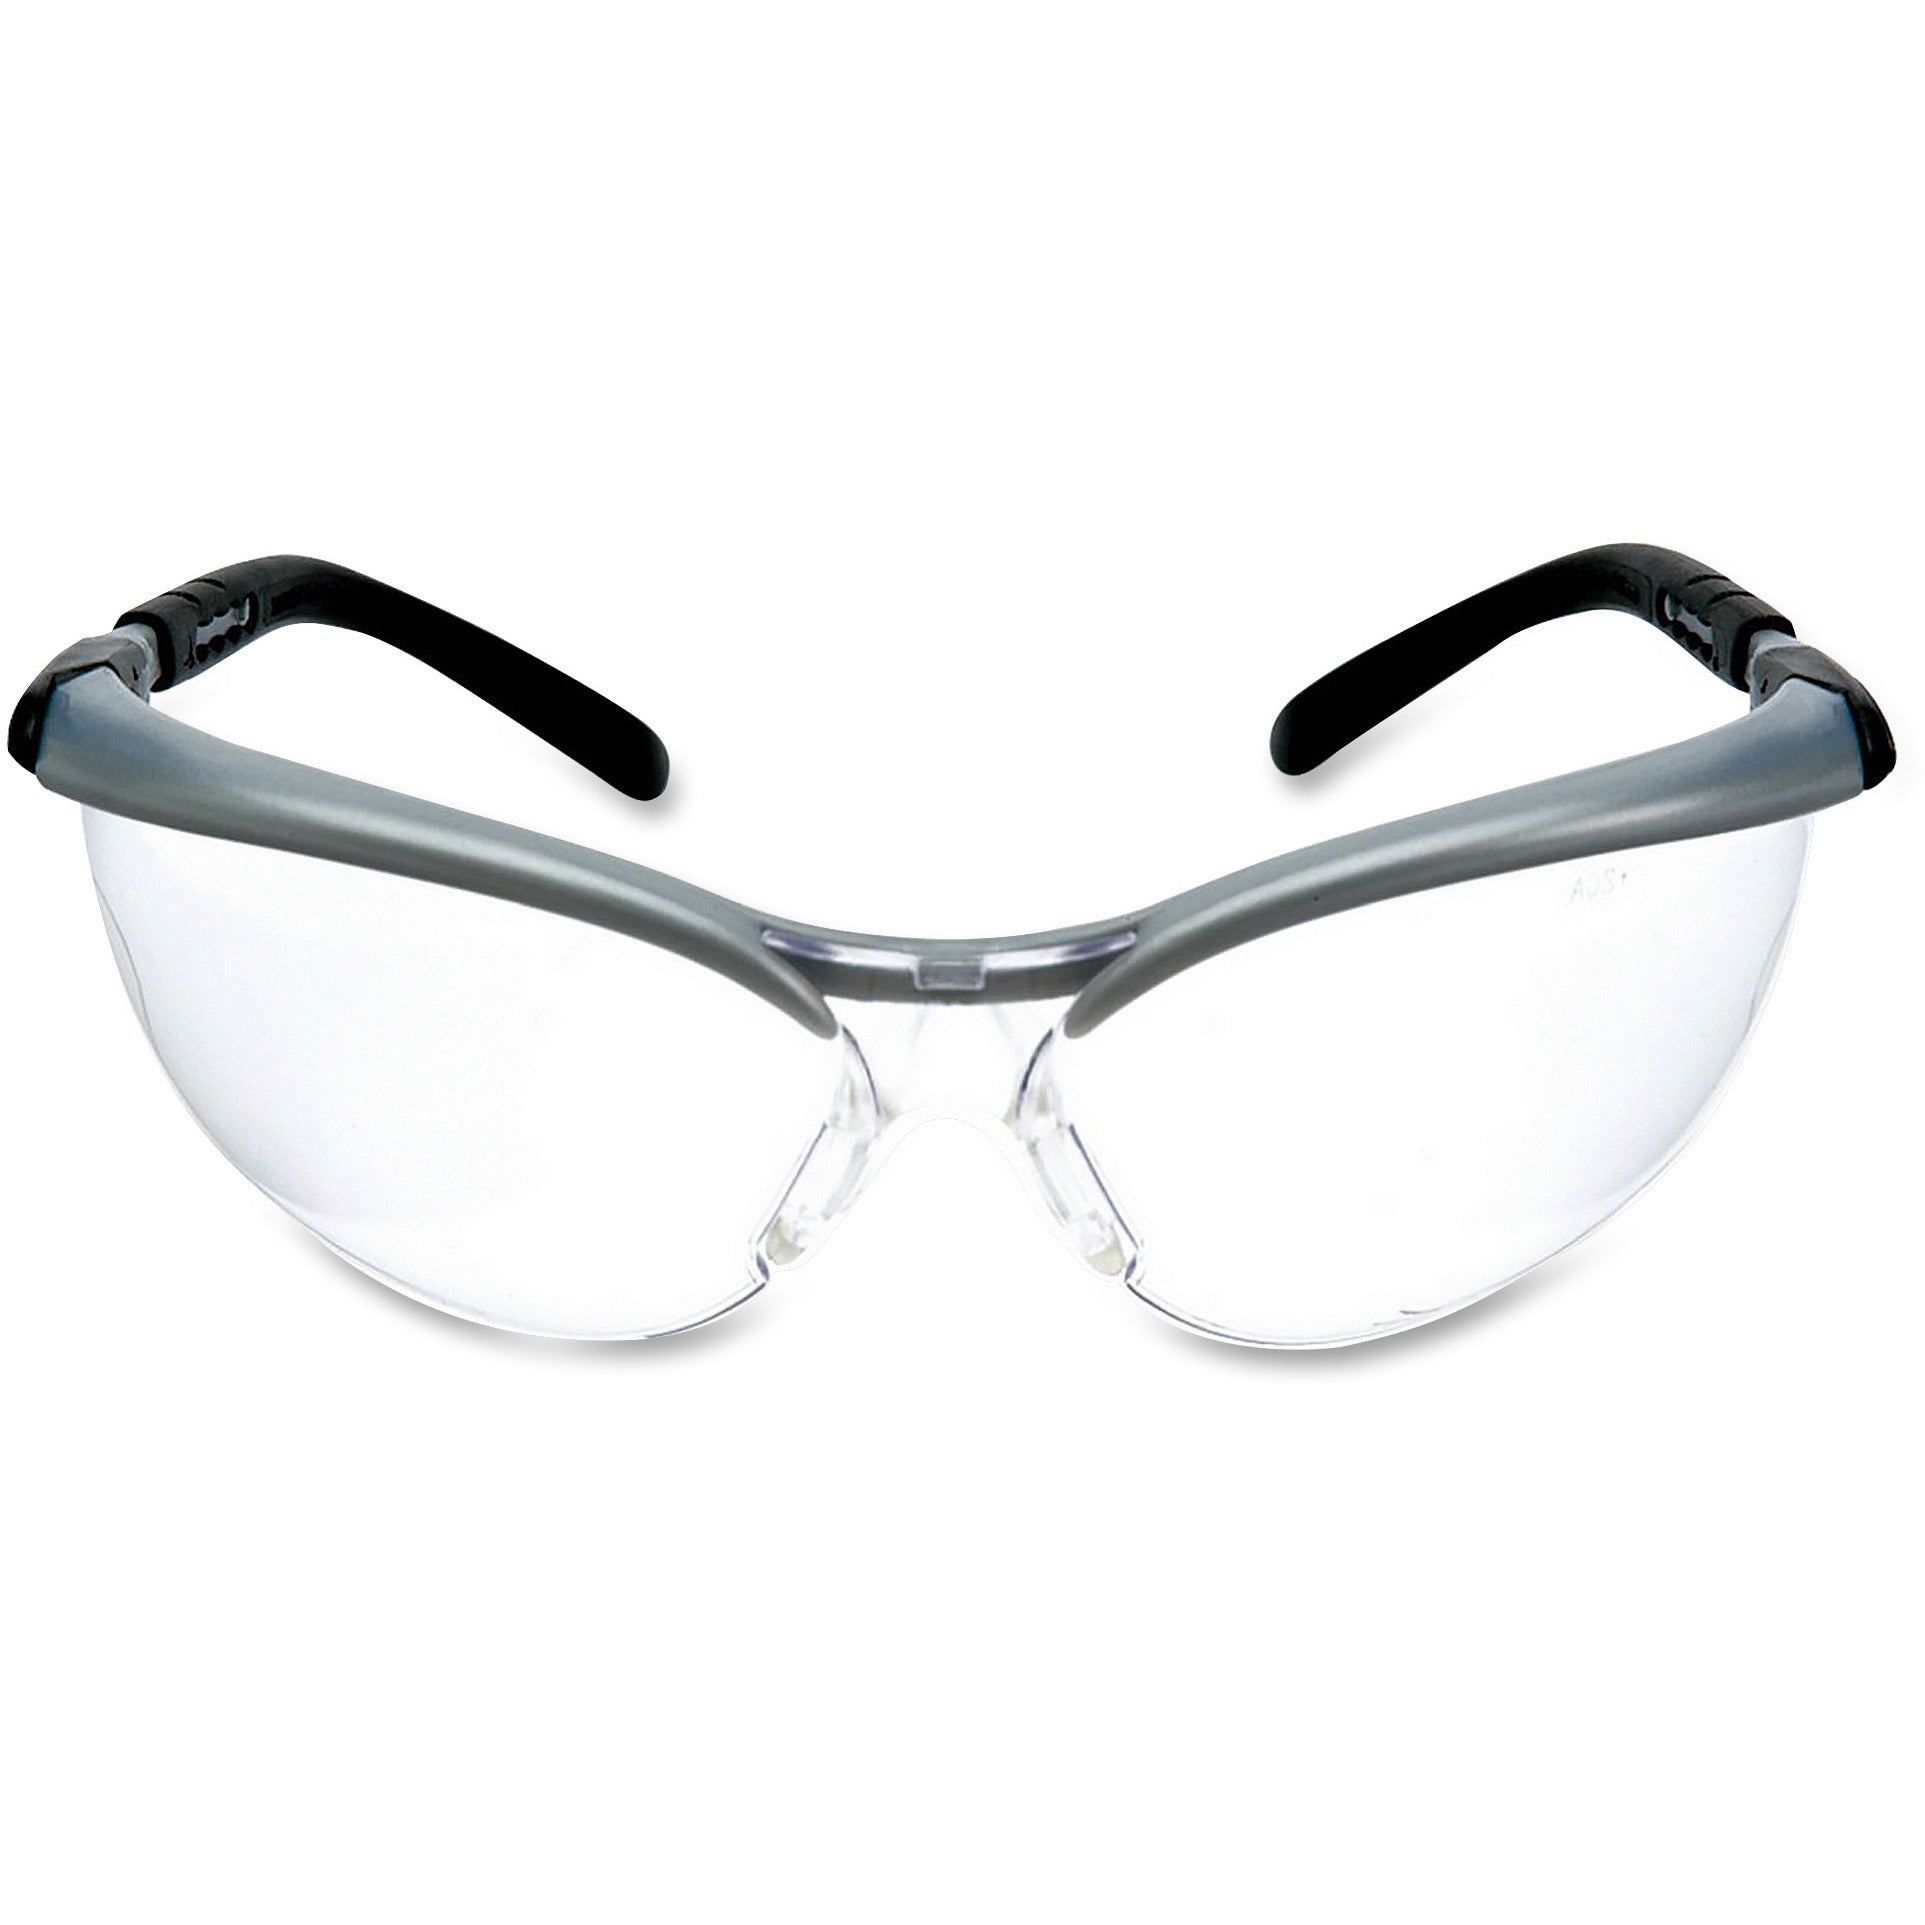 3M Adjustable BX Protective Eyewear - Ultraviolet Protection - Silver, Black - Anti-fog, Adjustable, Comfortable, UV Resistant - 1 Each - 